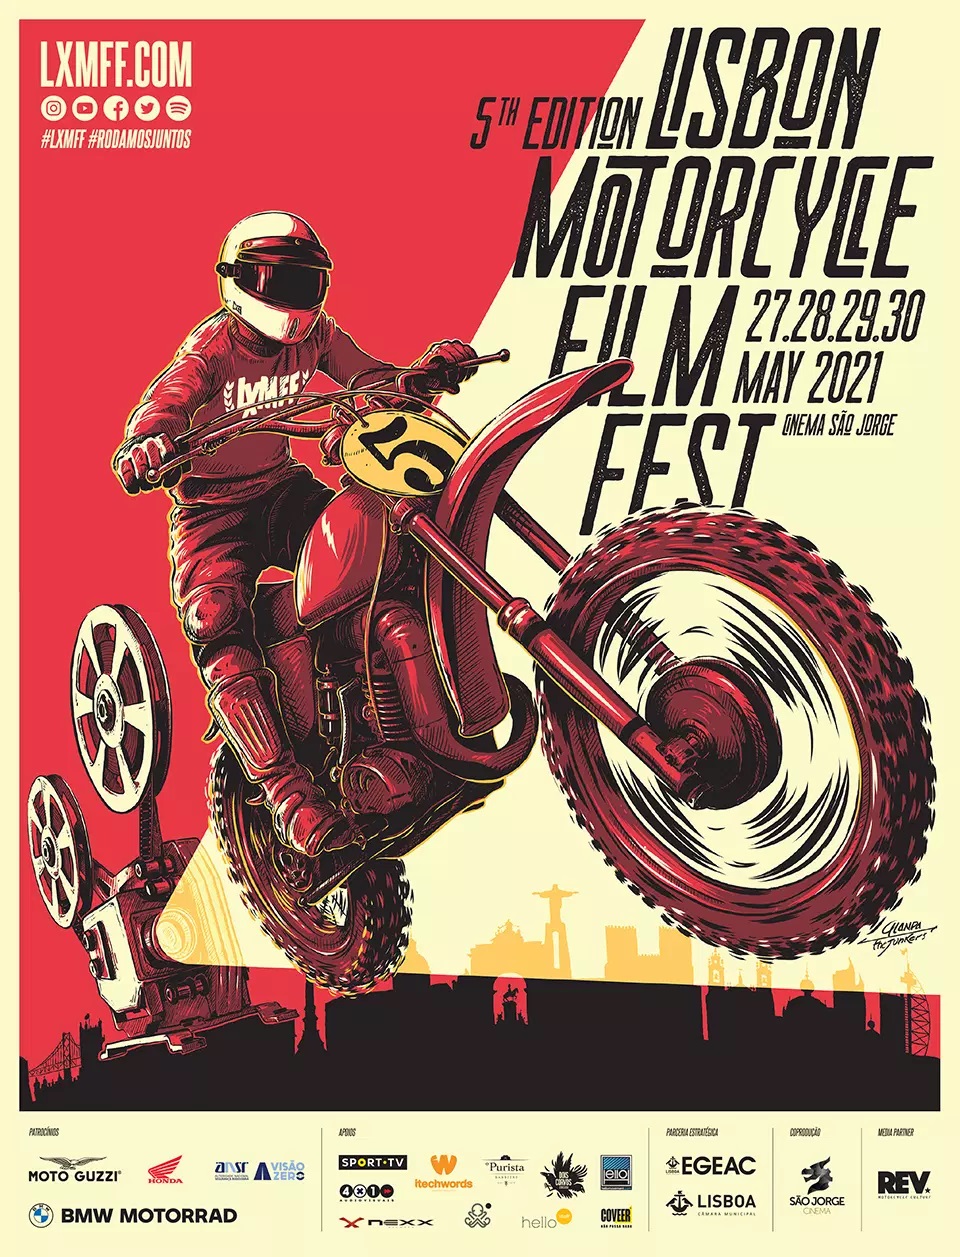 Lisbon Motorcycle Film Fest 2021